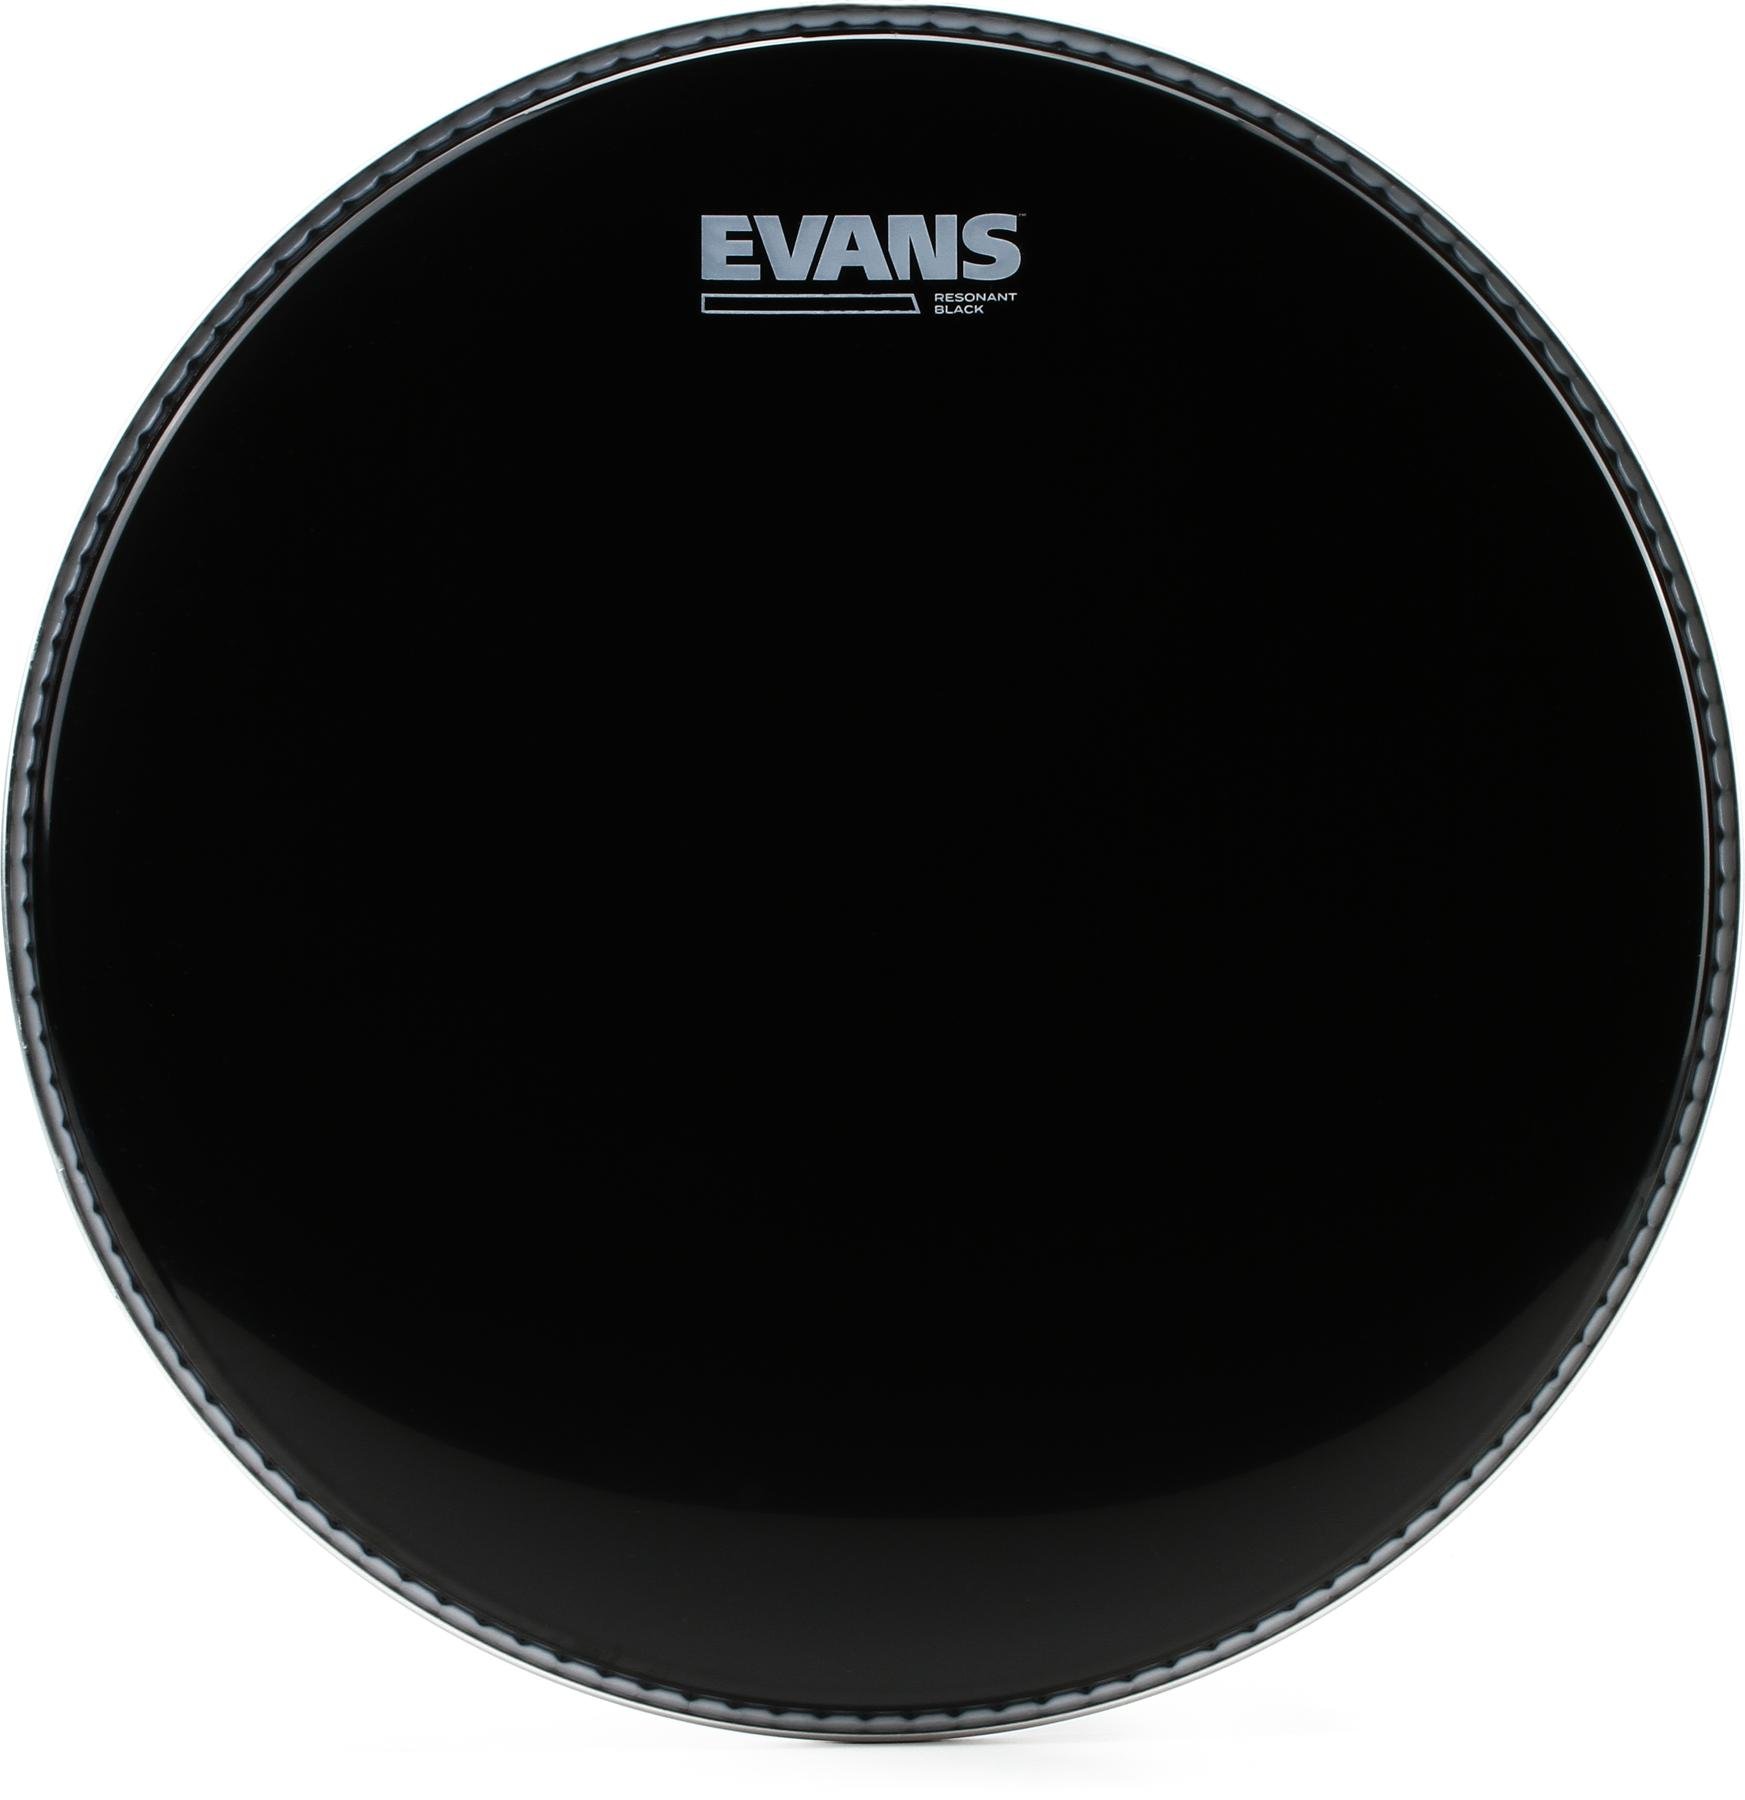 Evans Resonant Black - 13 inch | Sweetwater